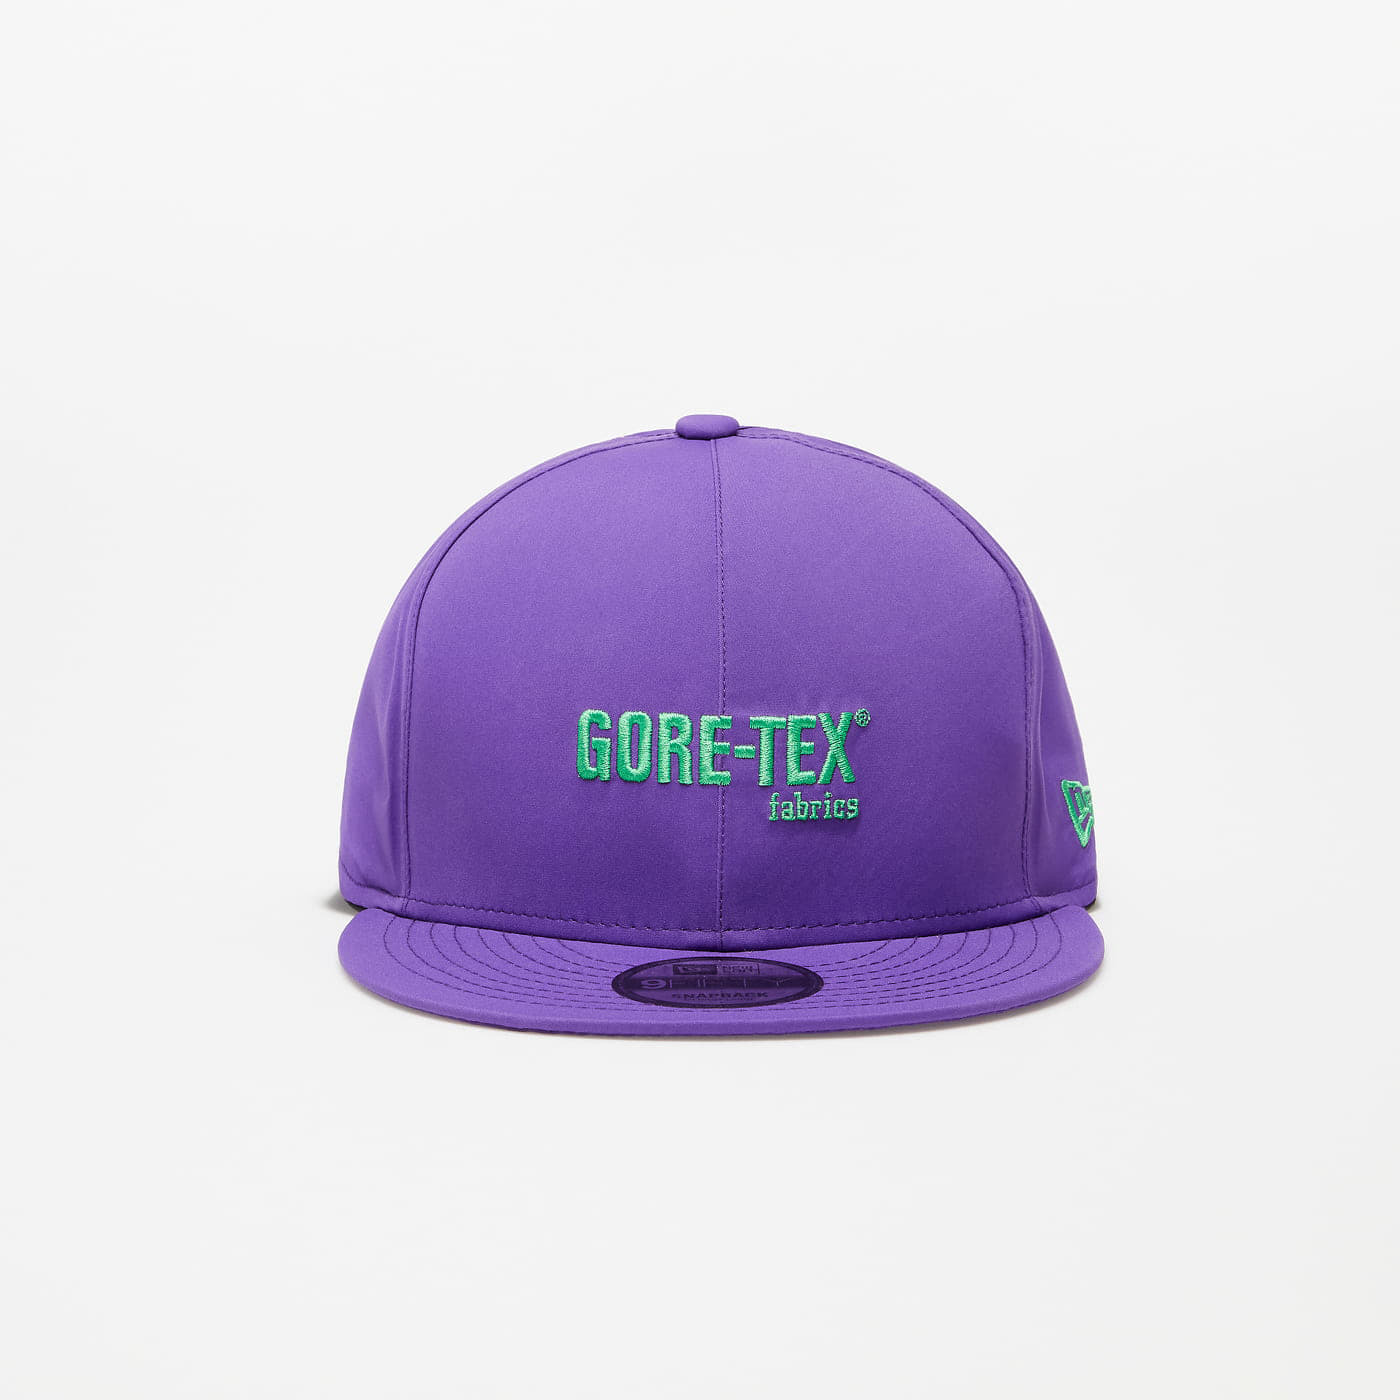 New Era - gore-tex purple 9fifty snapback cap purple